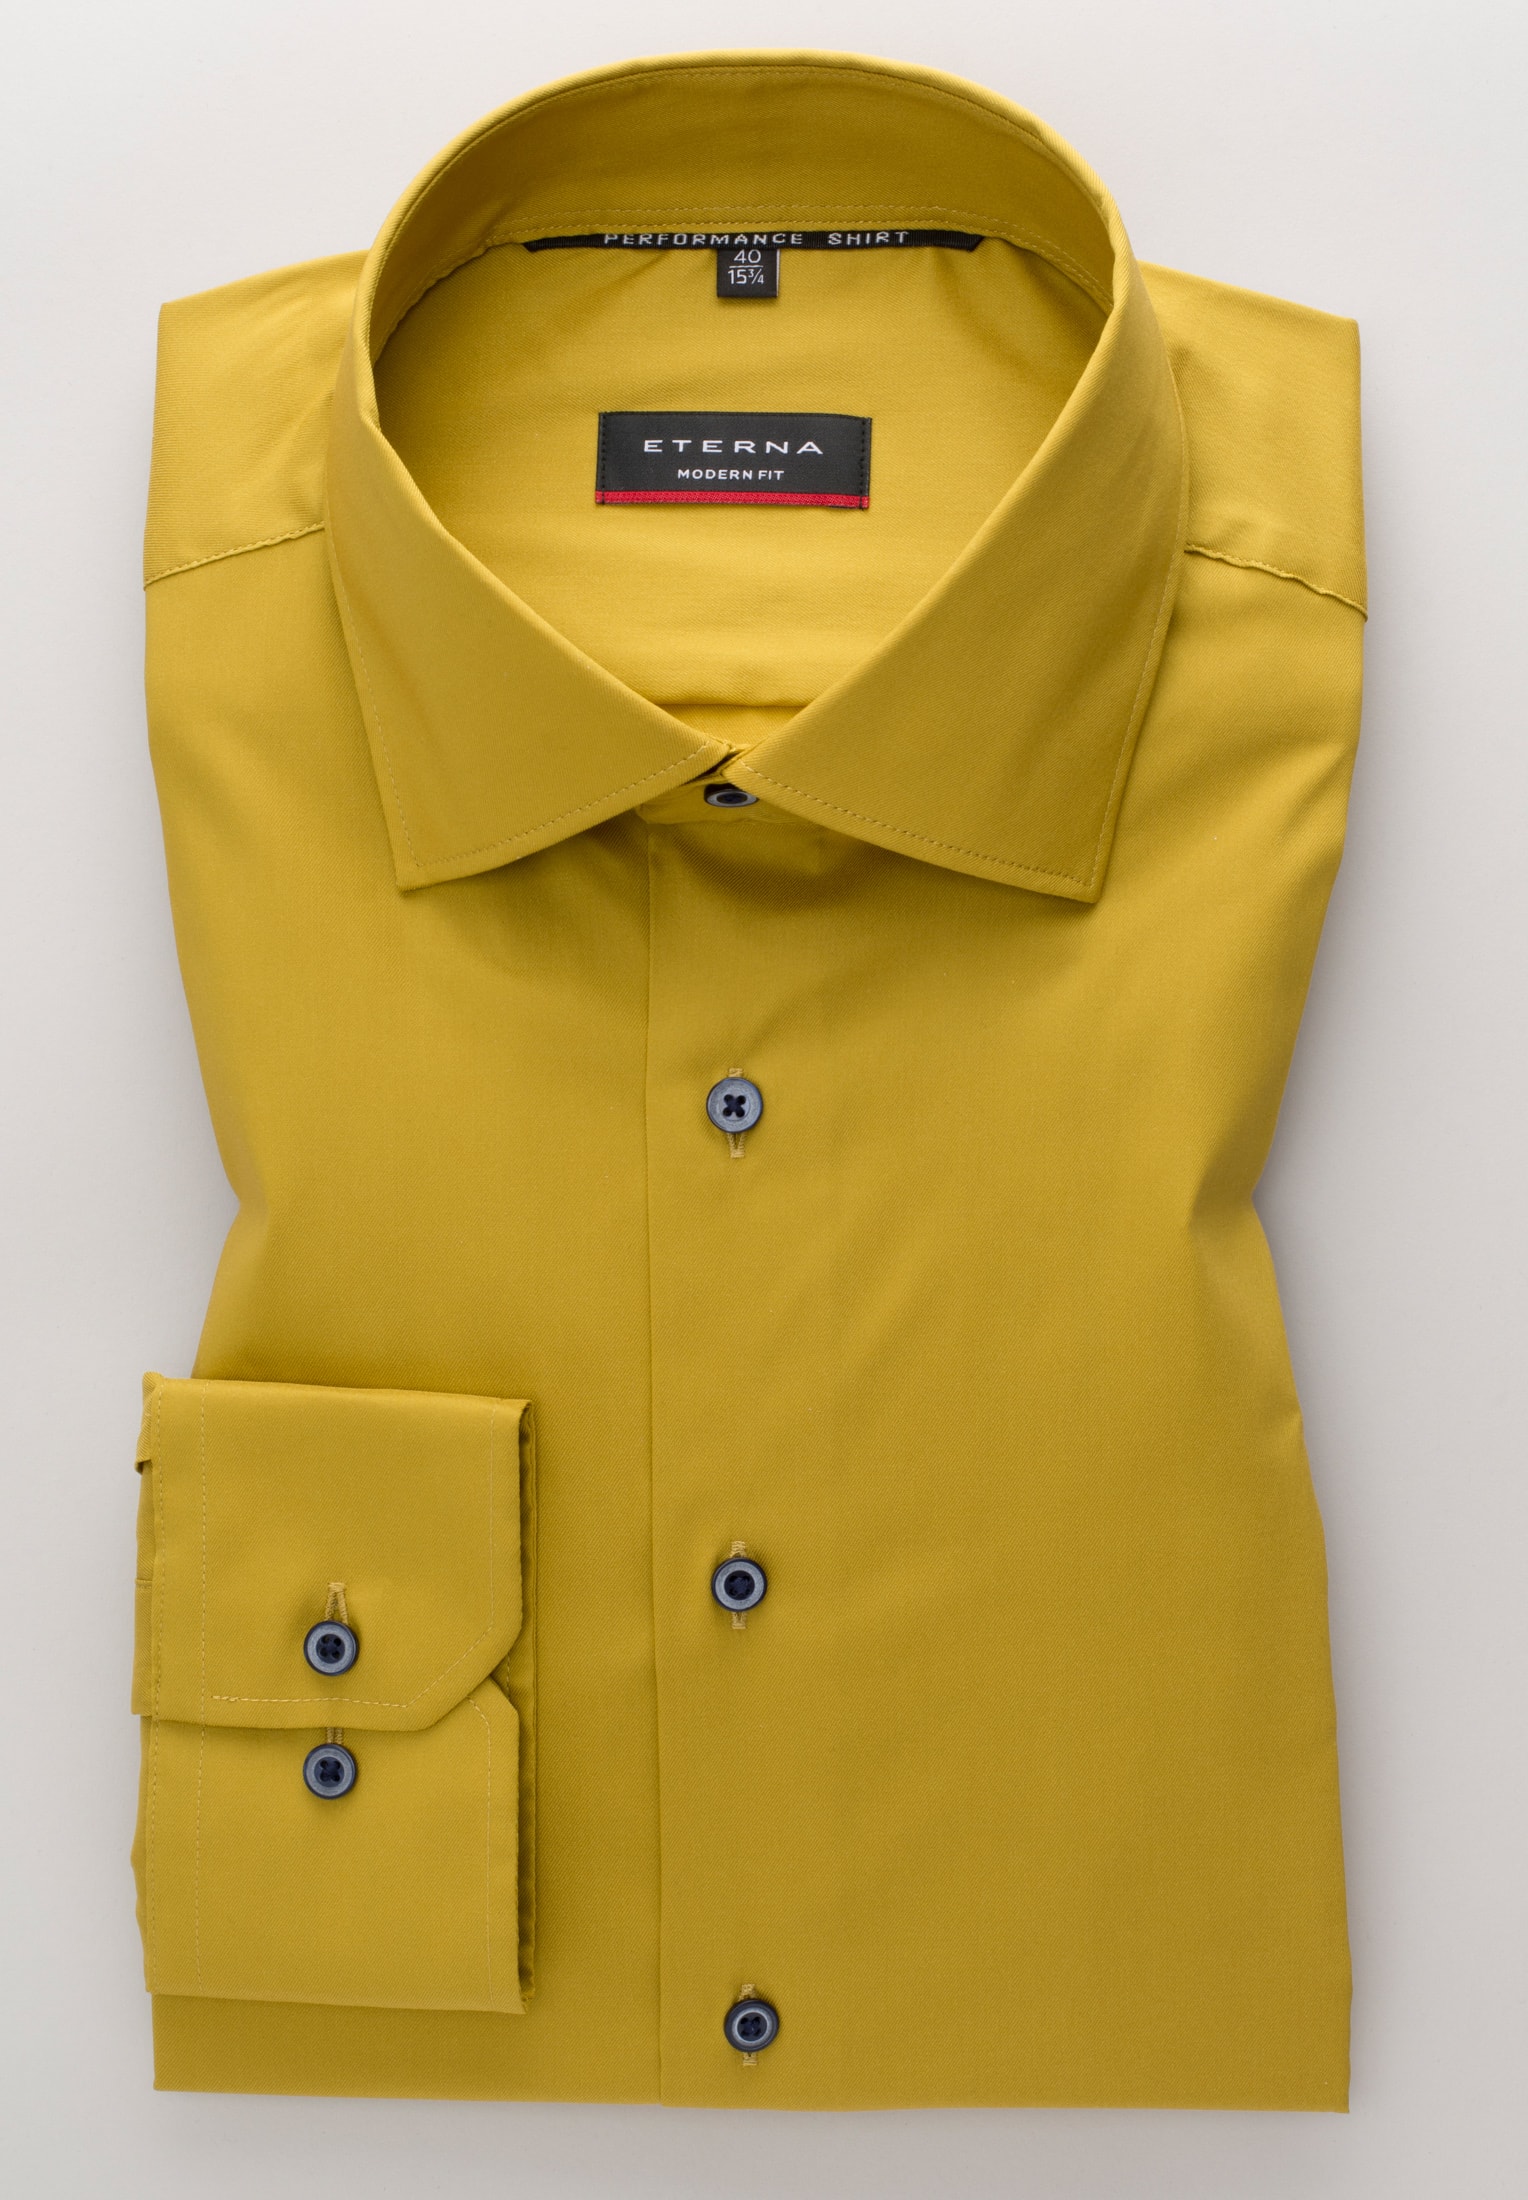 MODERN FIT Performance | | in | Shirt | unifarben Langarm gelb gelb 40 1SH02224-07-01-40-1/1